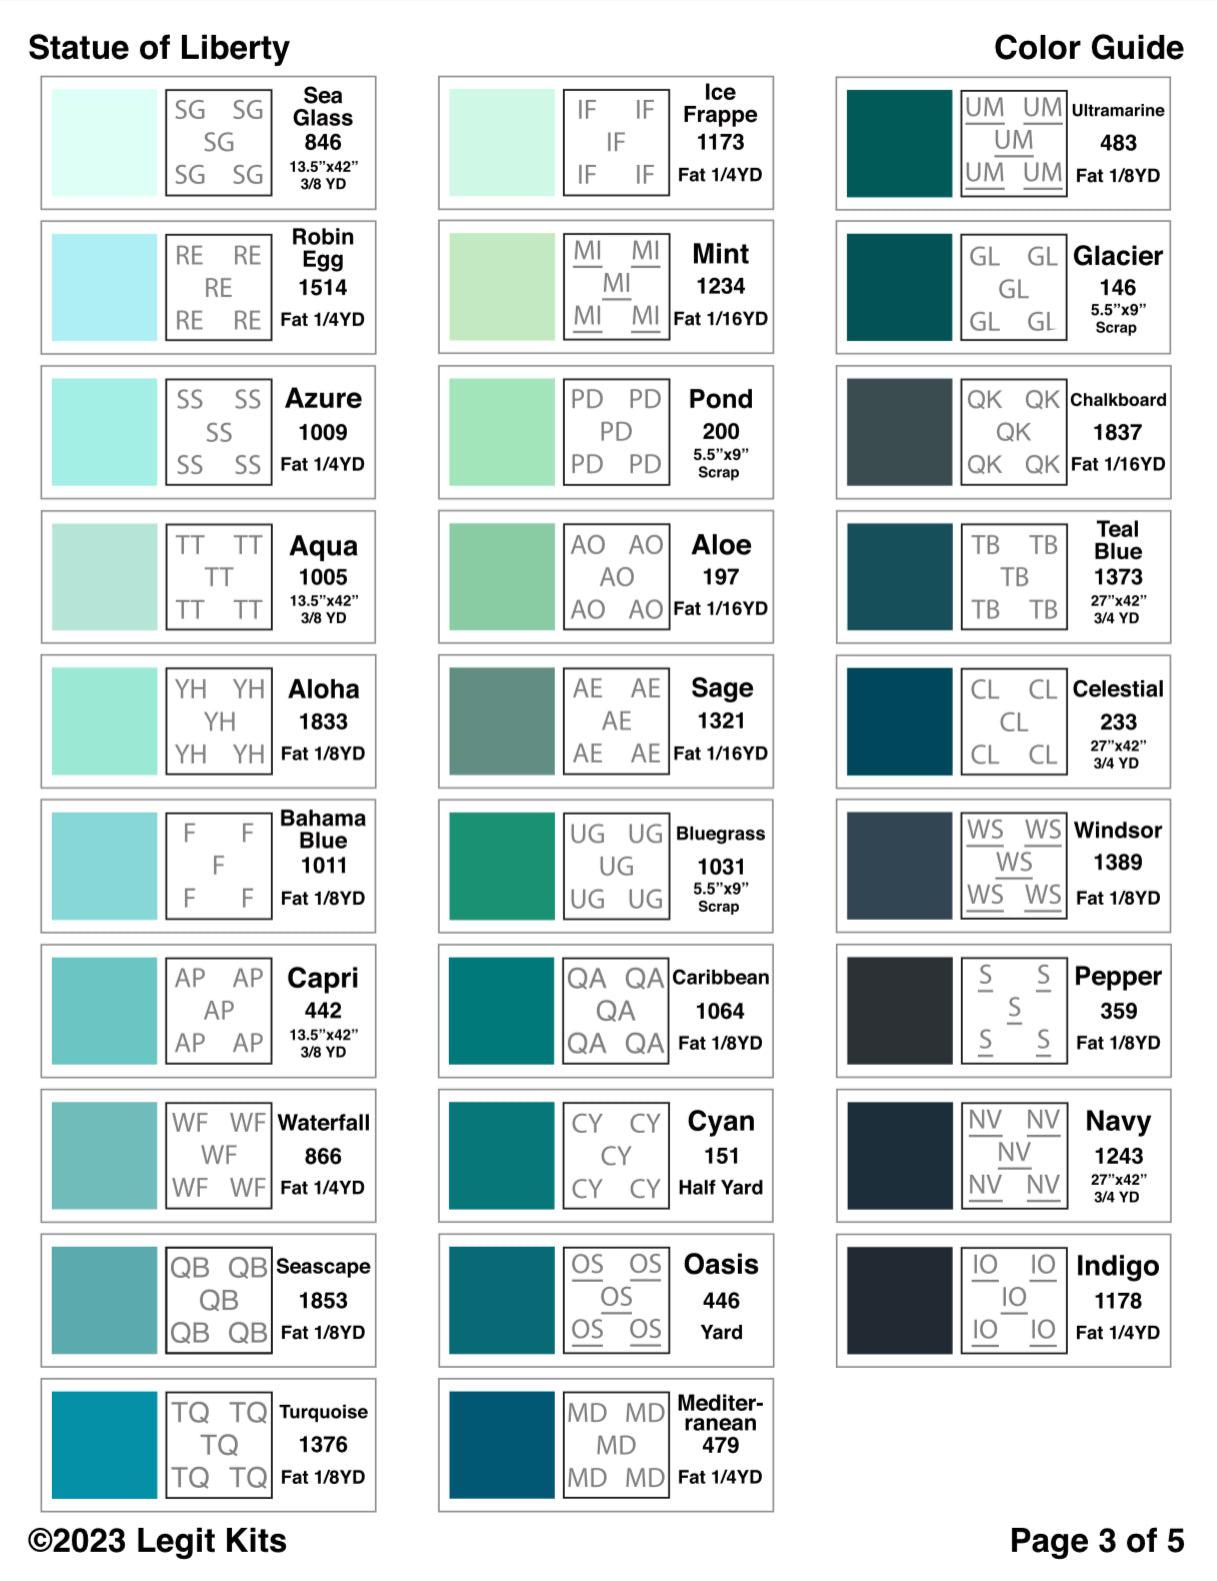 Statue of Liberty Pattern-Legit Kits-My Favorite Quilt Store